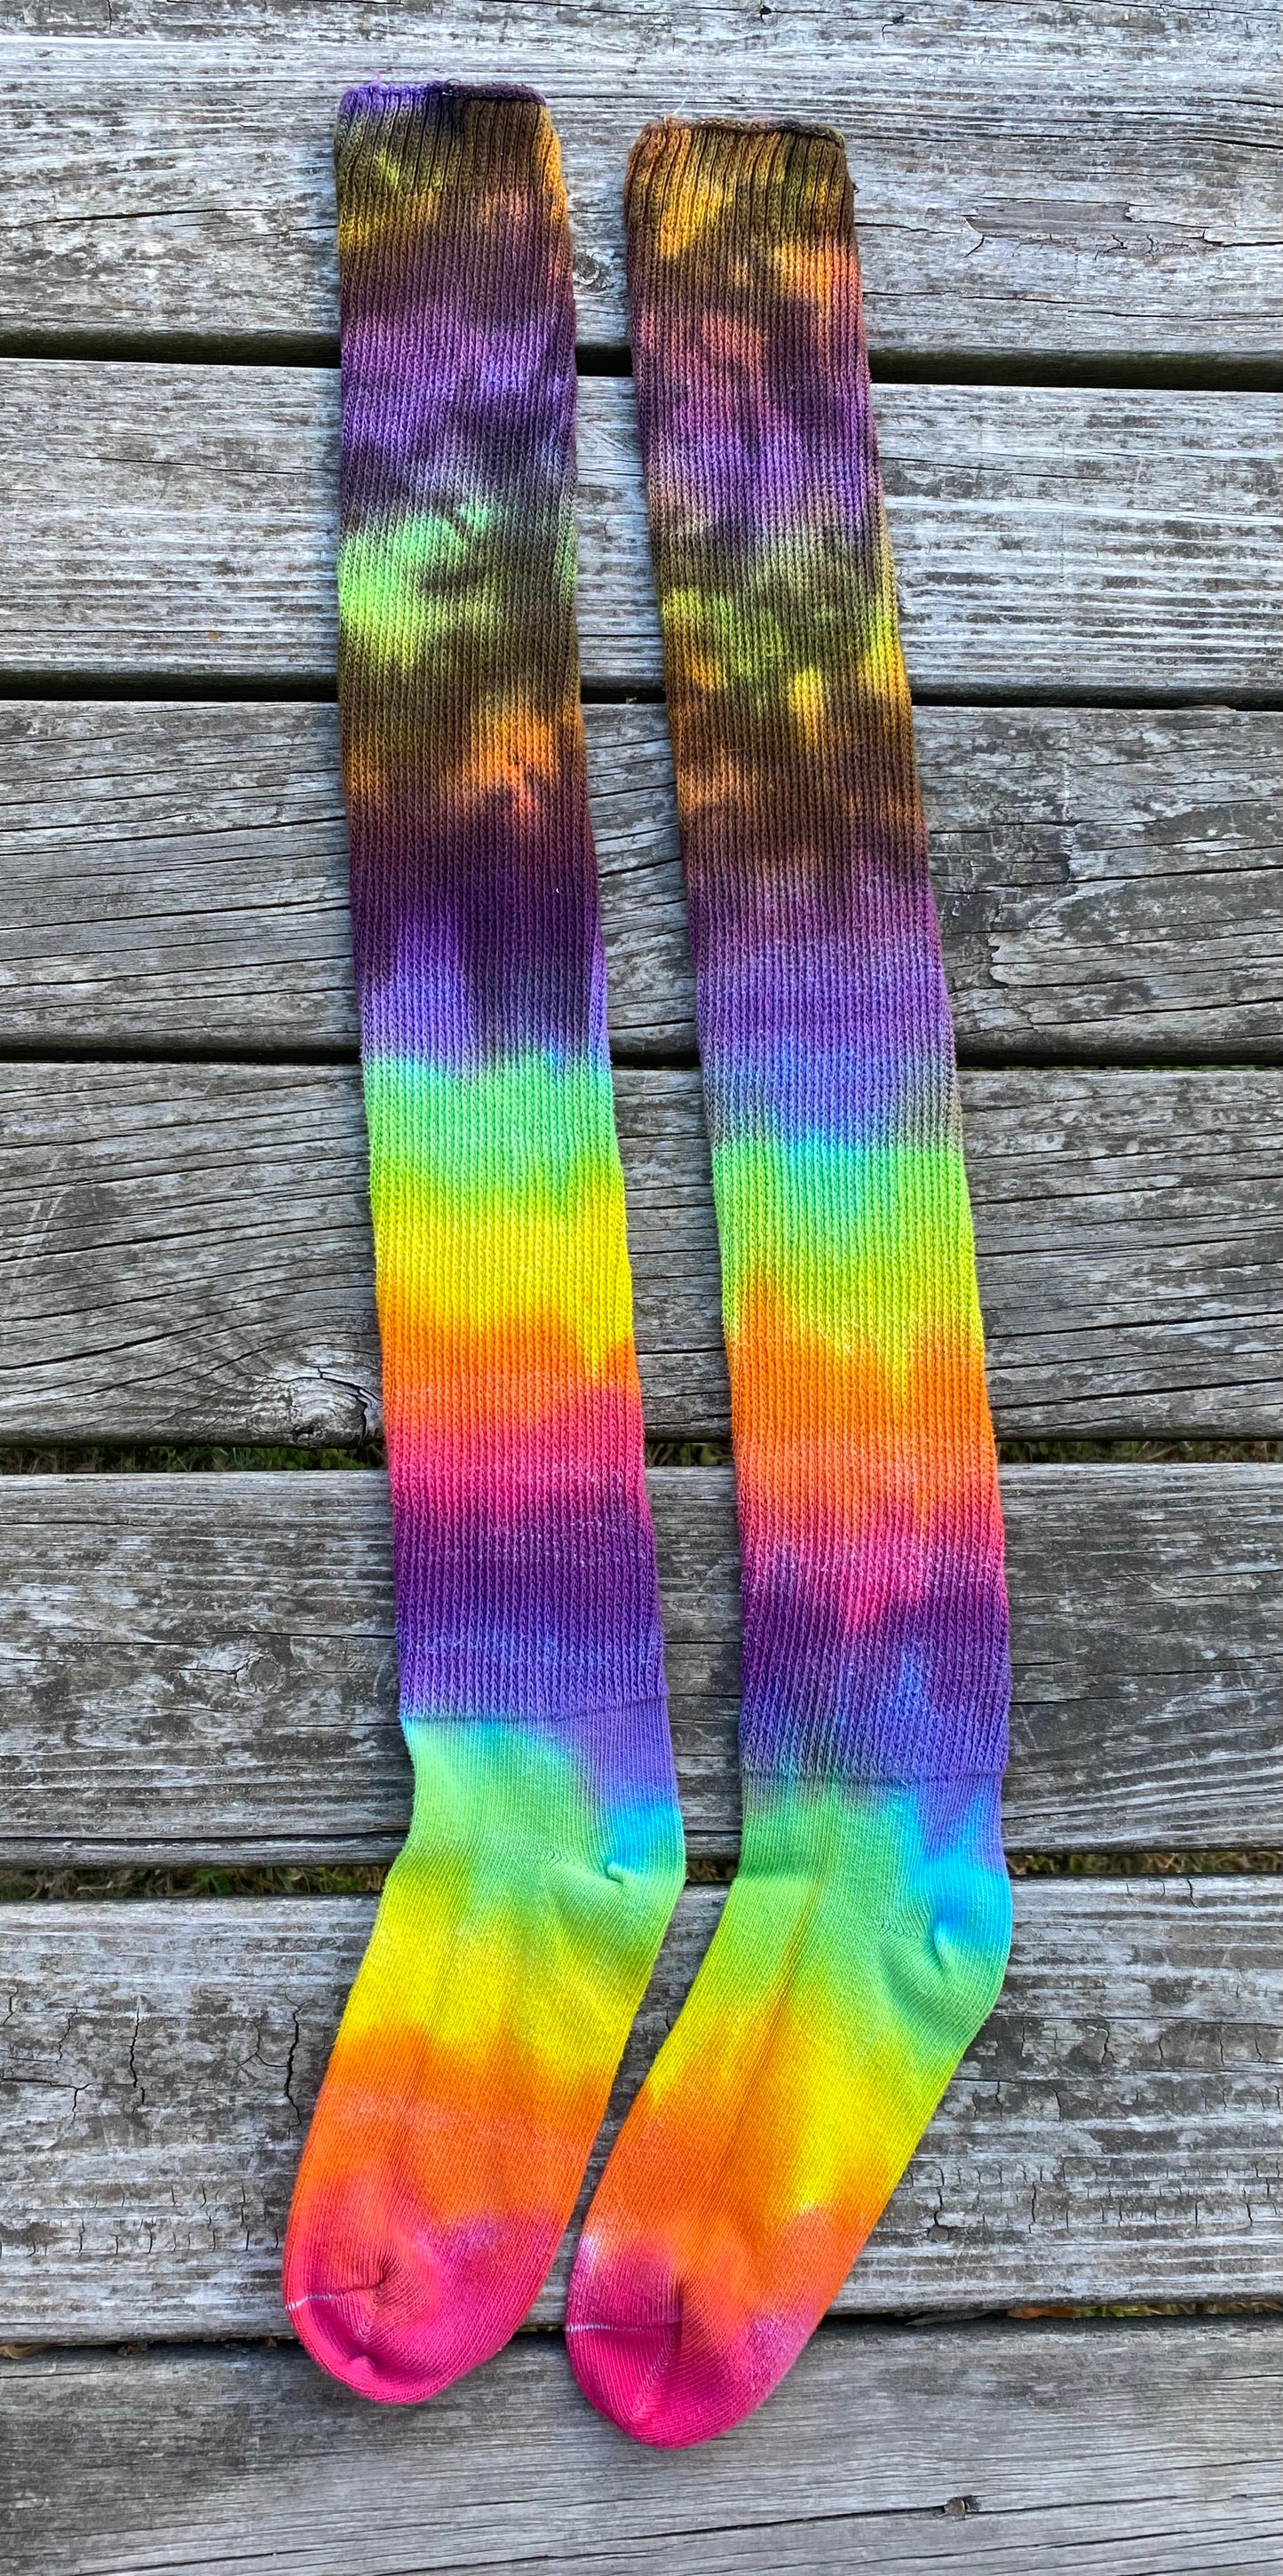 Thigh high adult sized bright rainbow and black socks